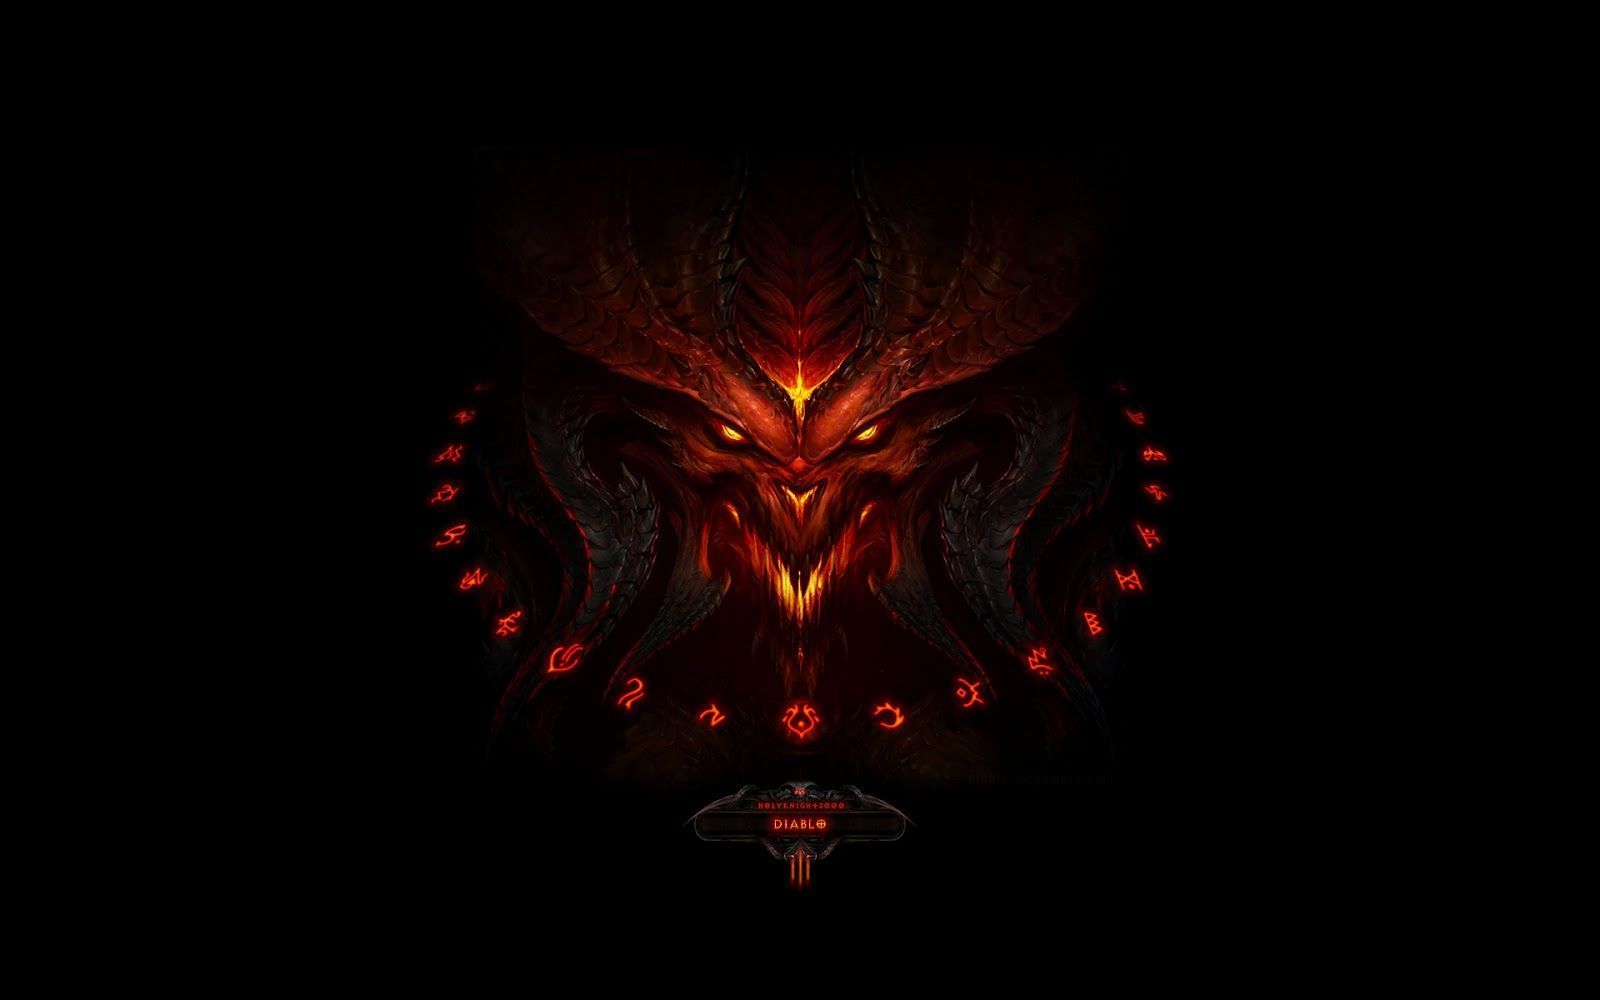 Diablo 3 Hd Wallpaper | My Heart up Close